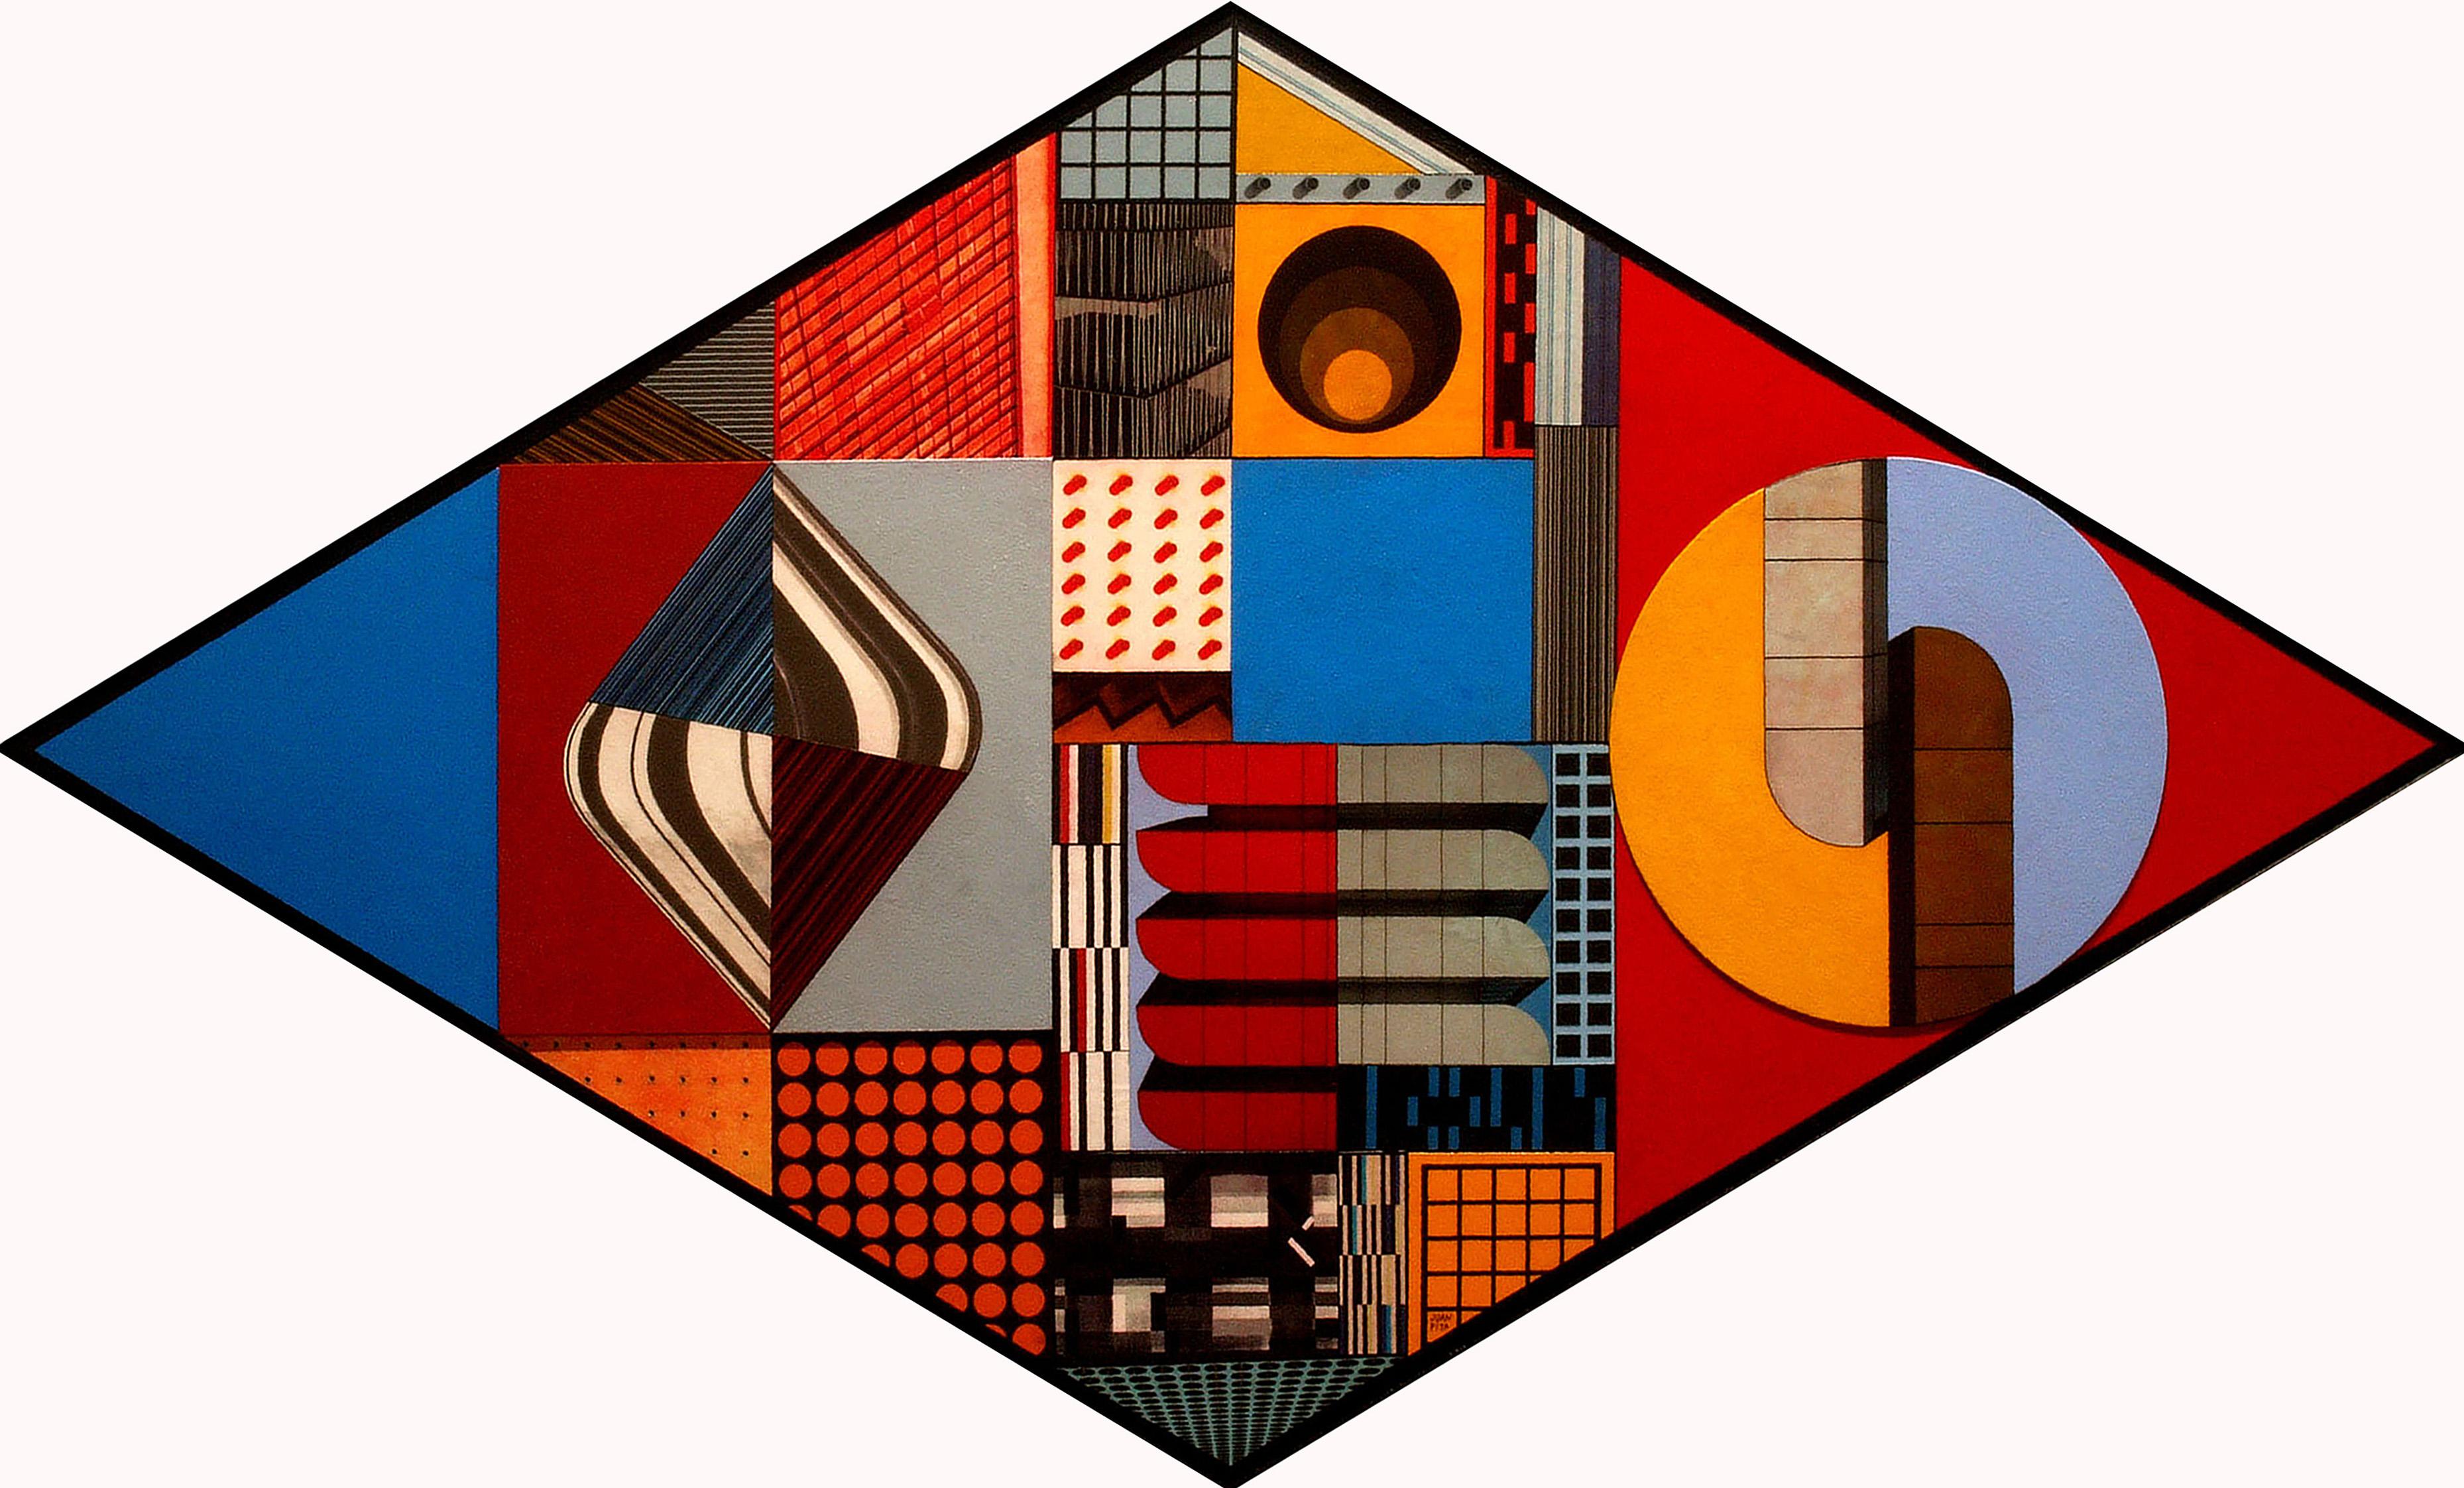 Bauhaus Archiv en rombo. Futurist colorful abstract constructivist painting - Mixed Media Art by Juan Pita